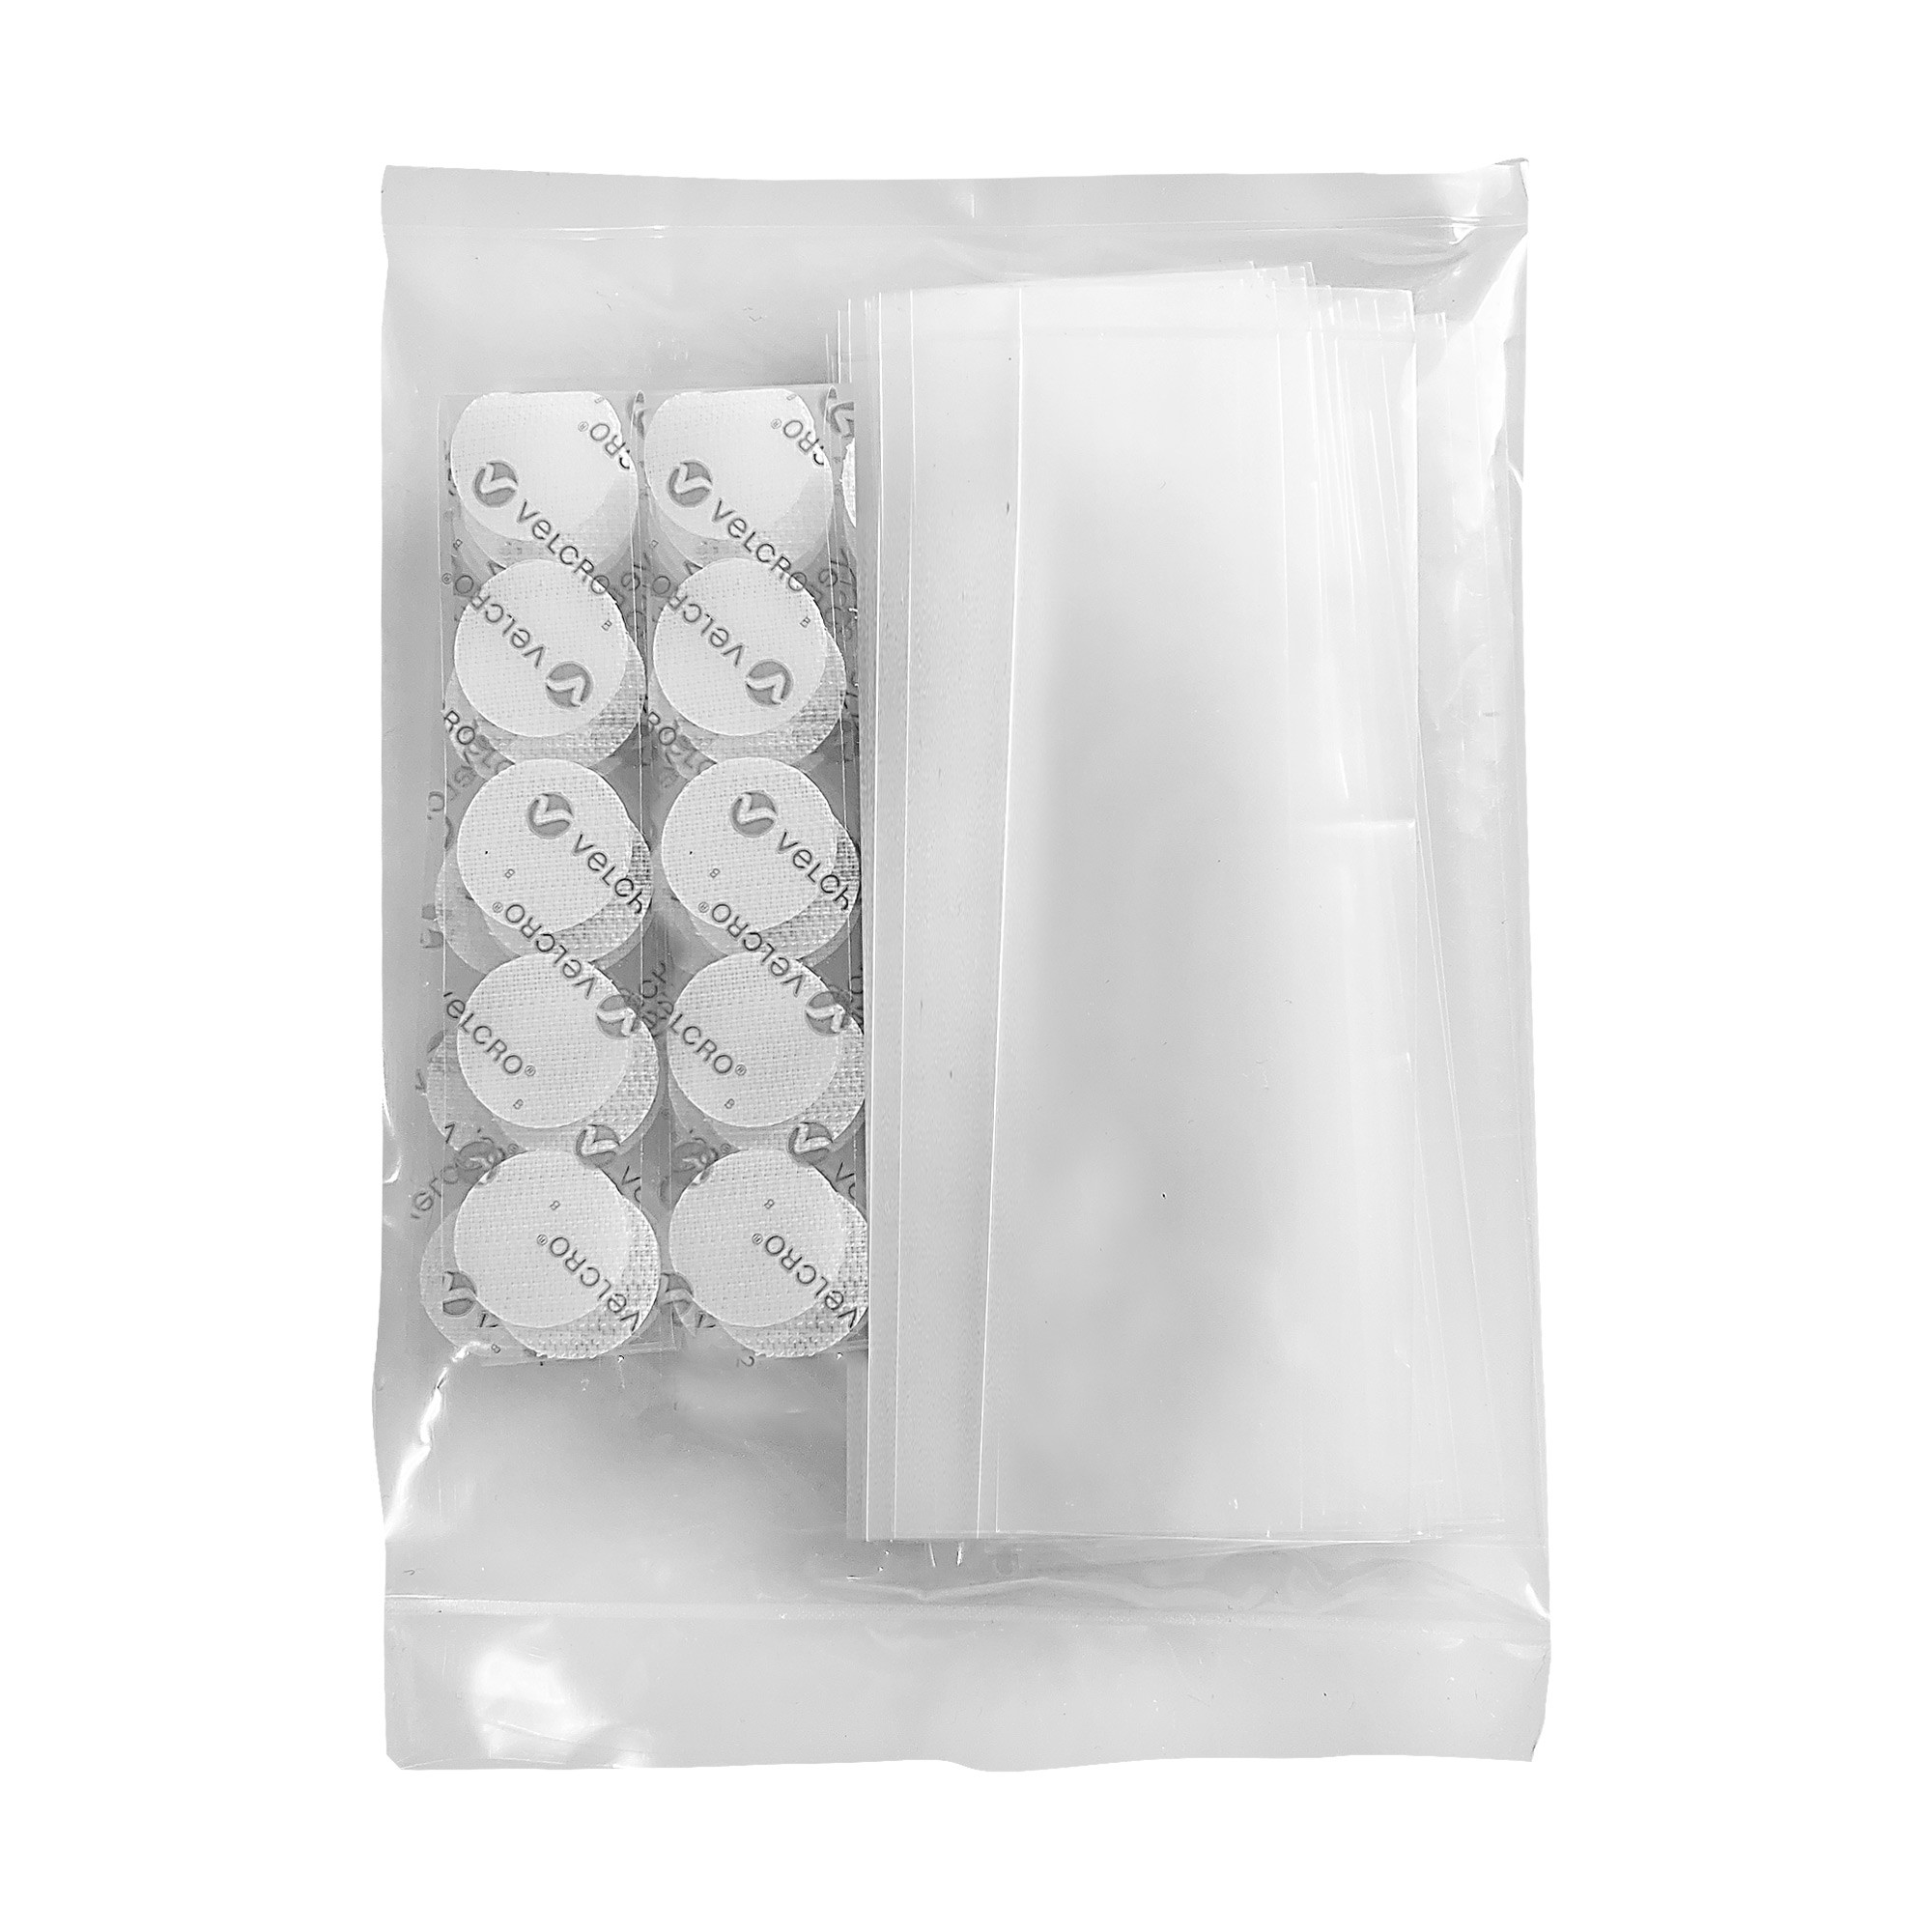 Nurse's Office 32-Unit Emergency Supplies Polybag/Refill Kit